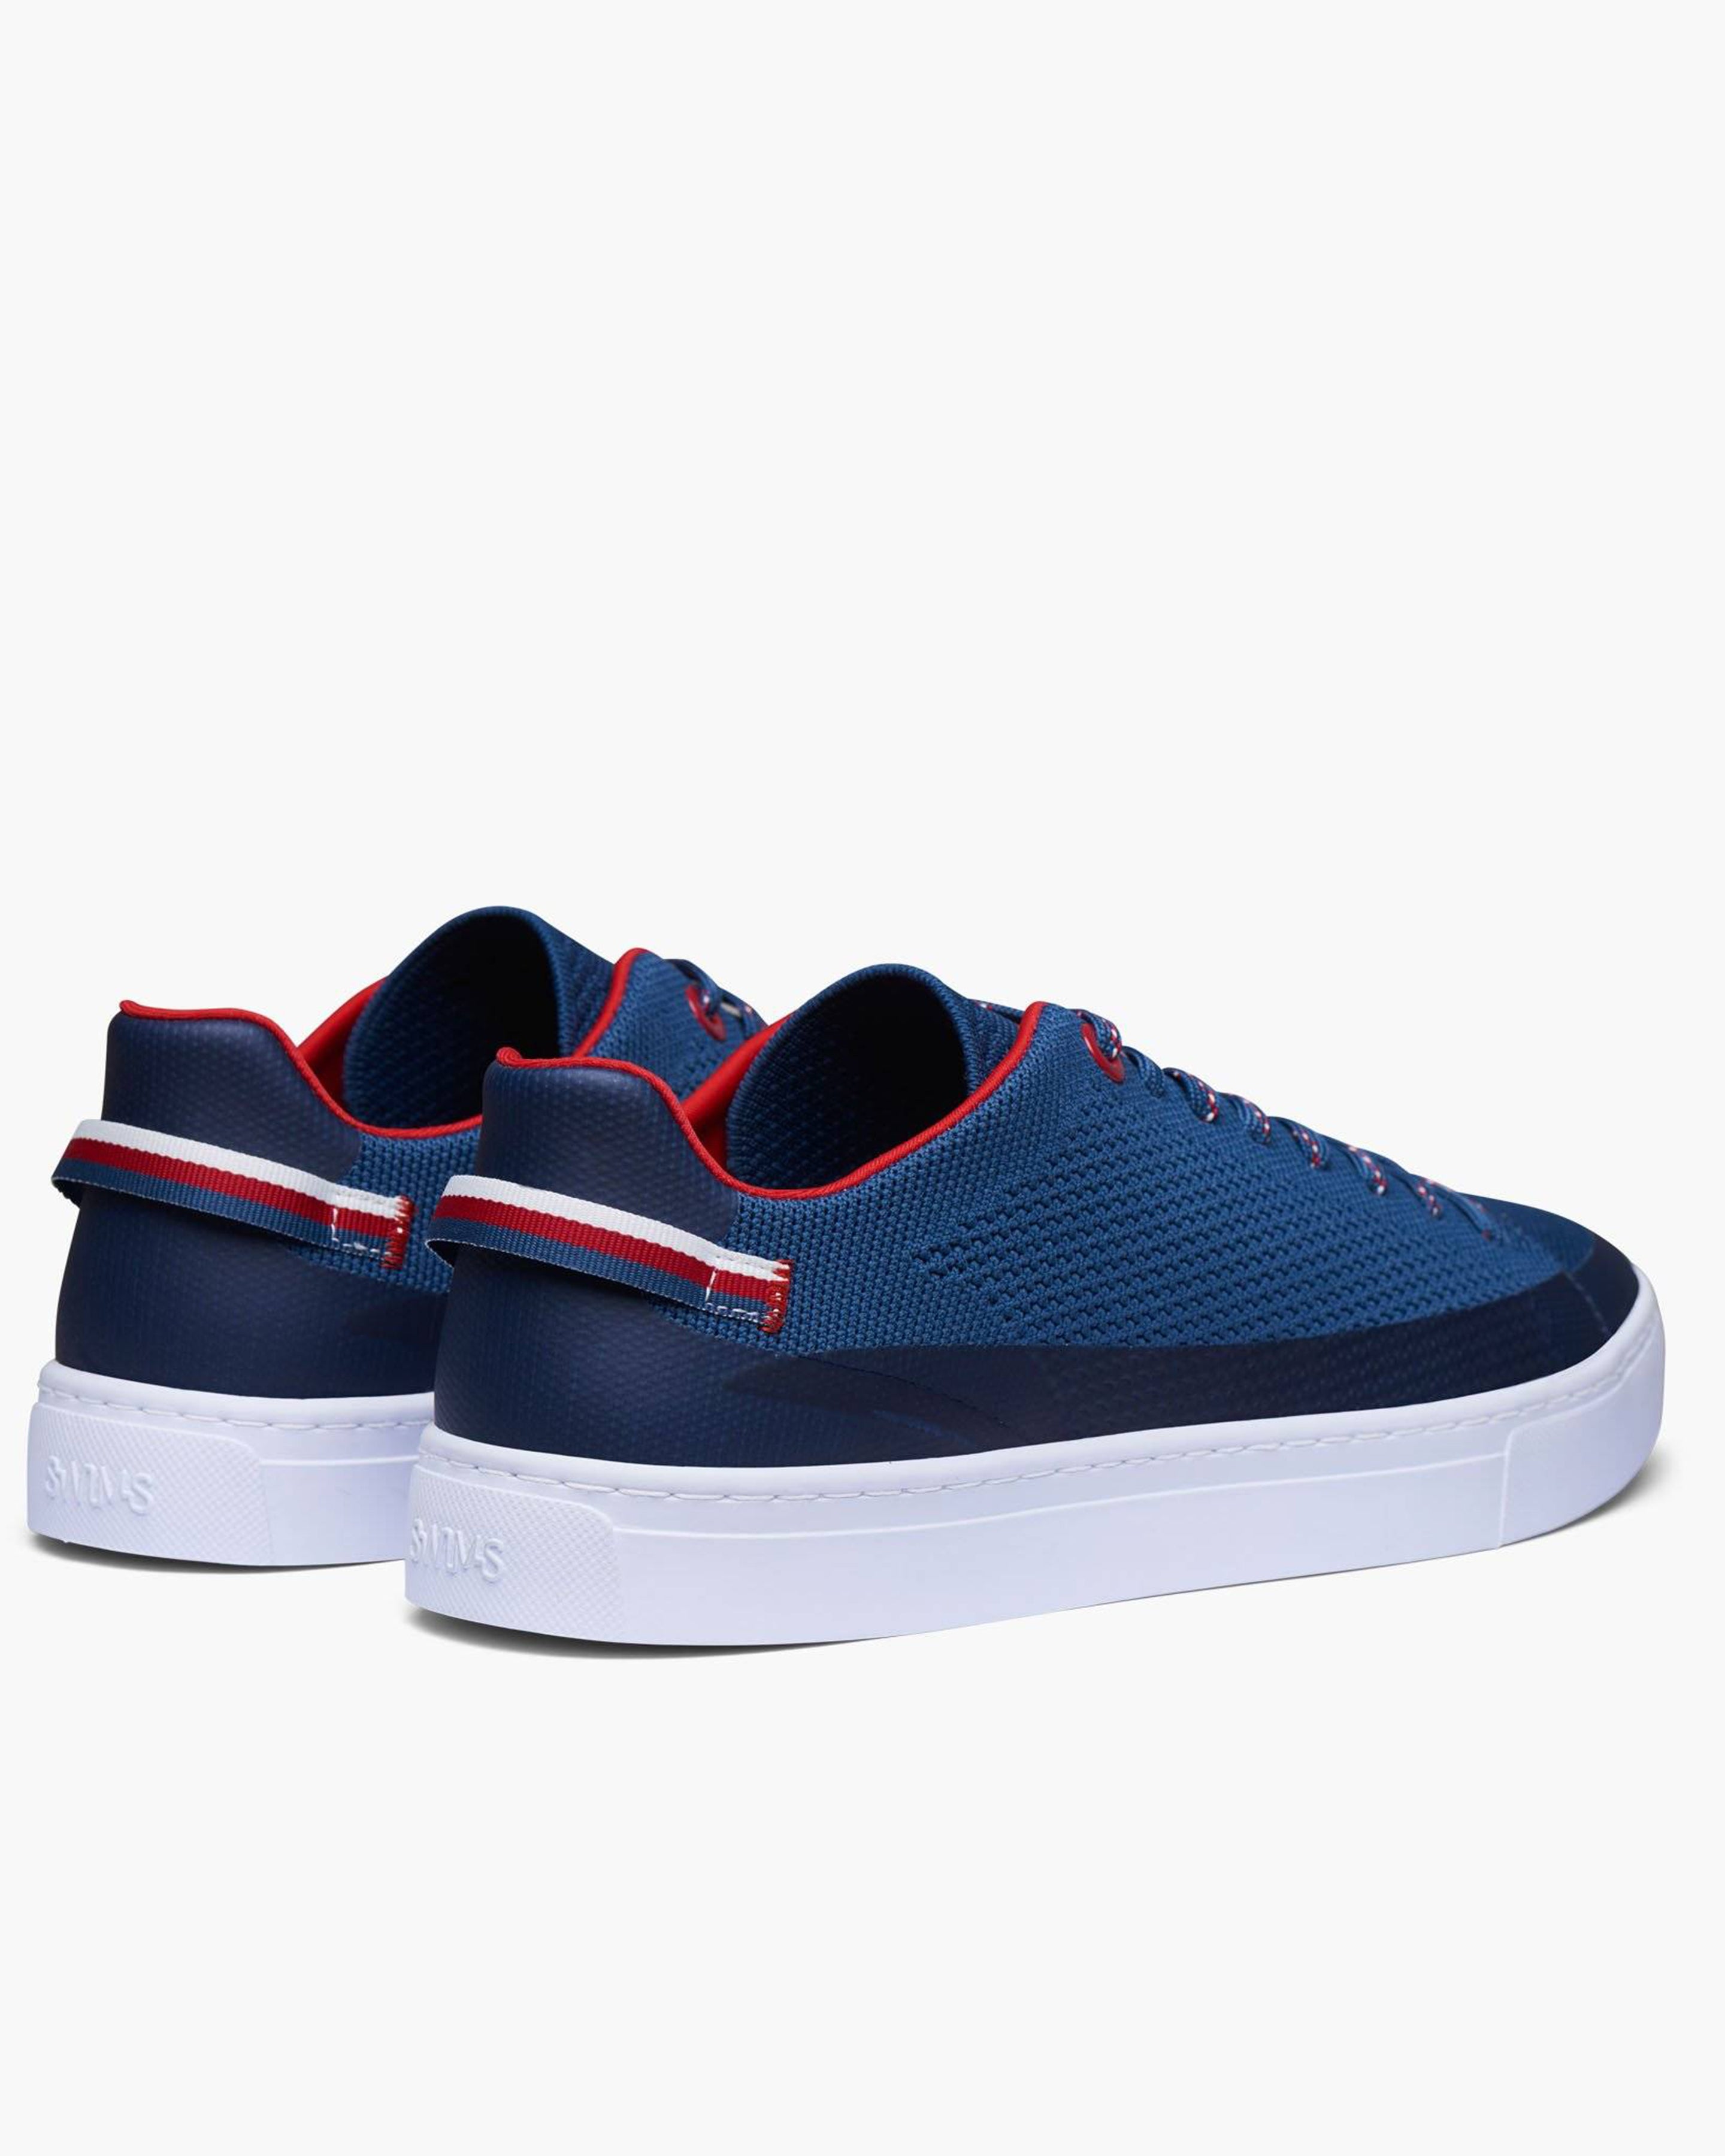 SWIMS - Park Sneaker in Navy/Red 21373-918